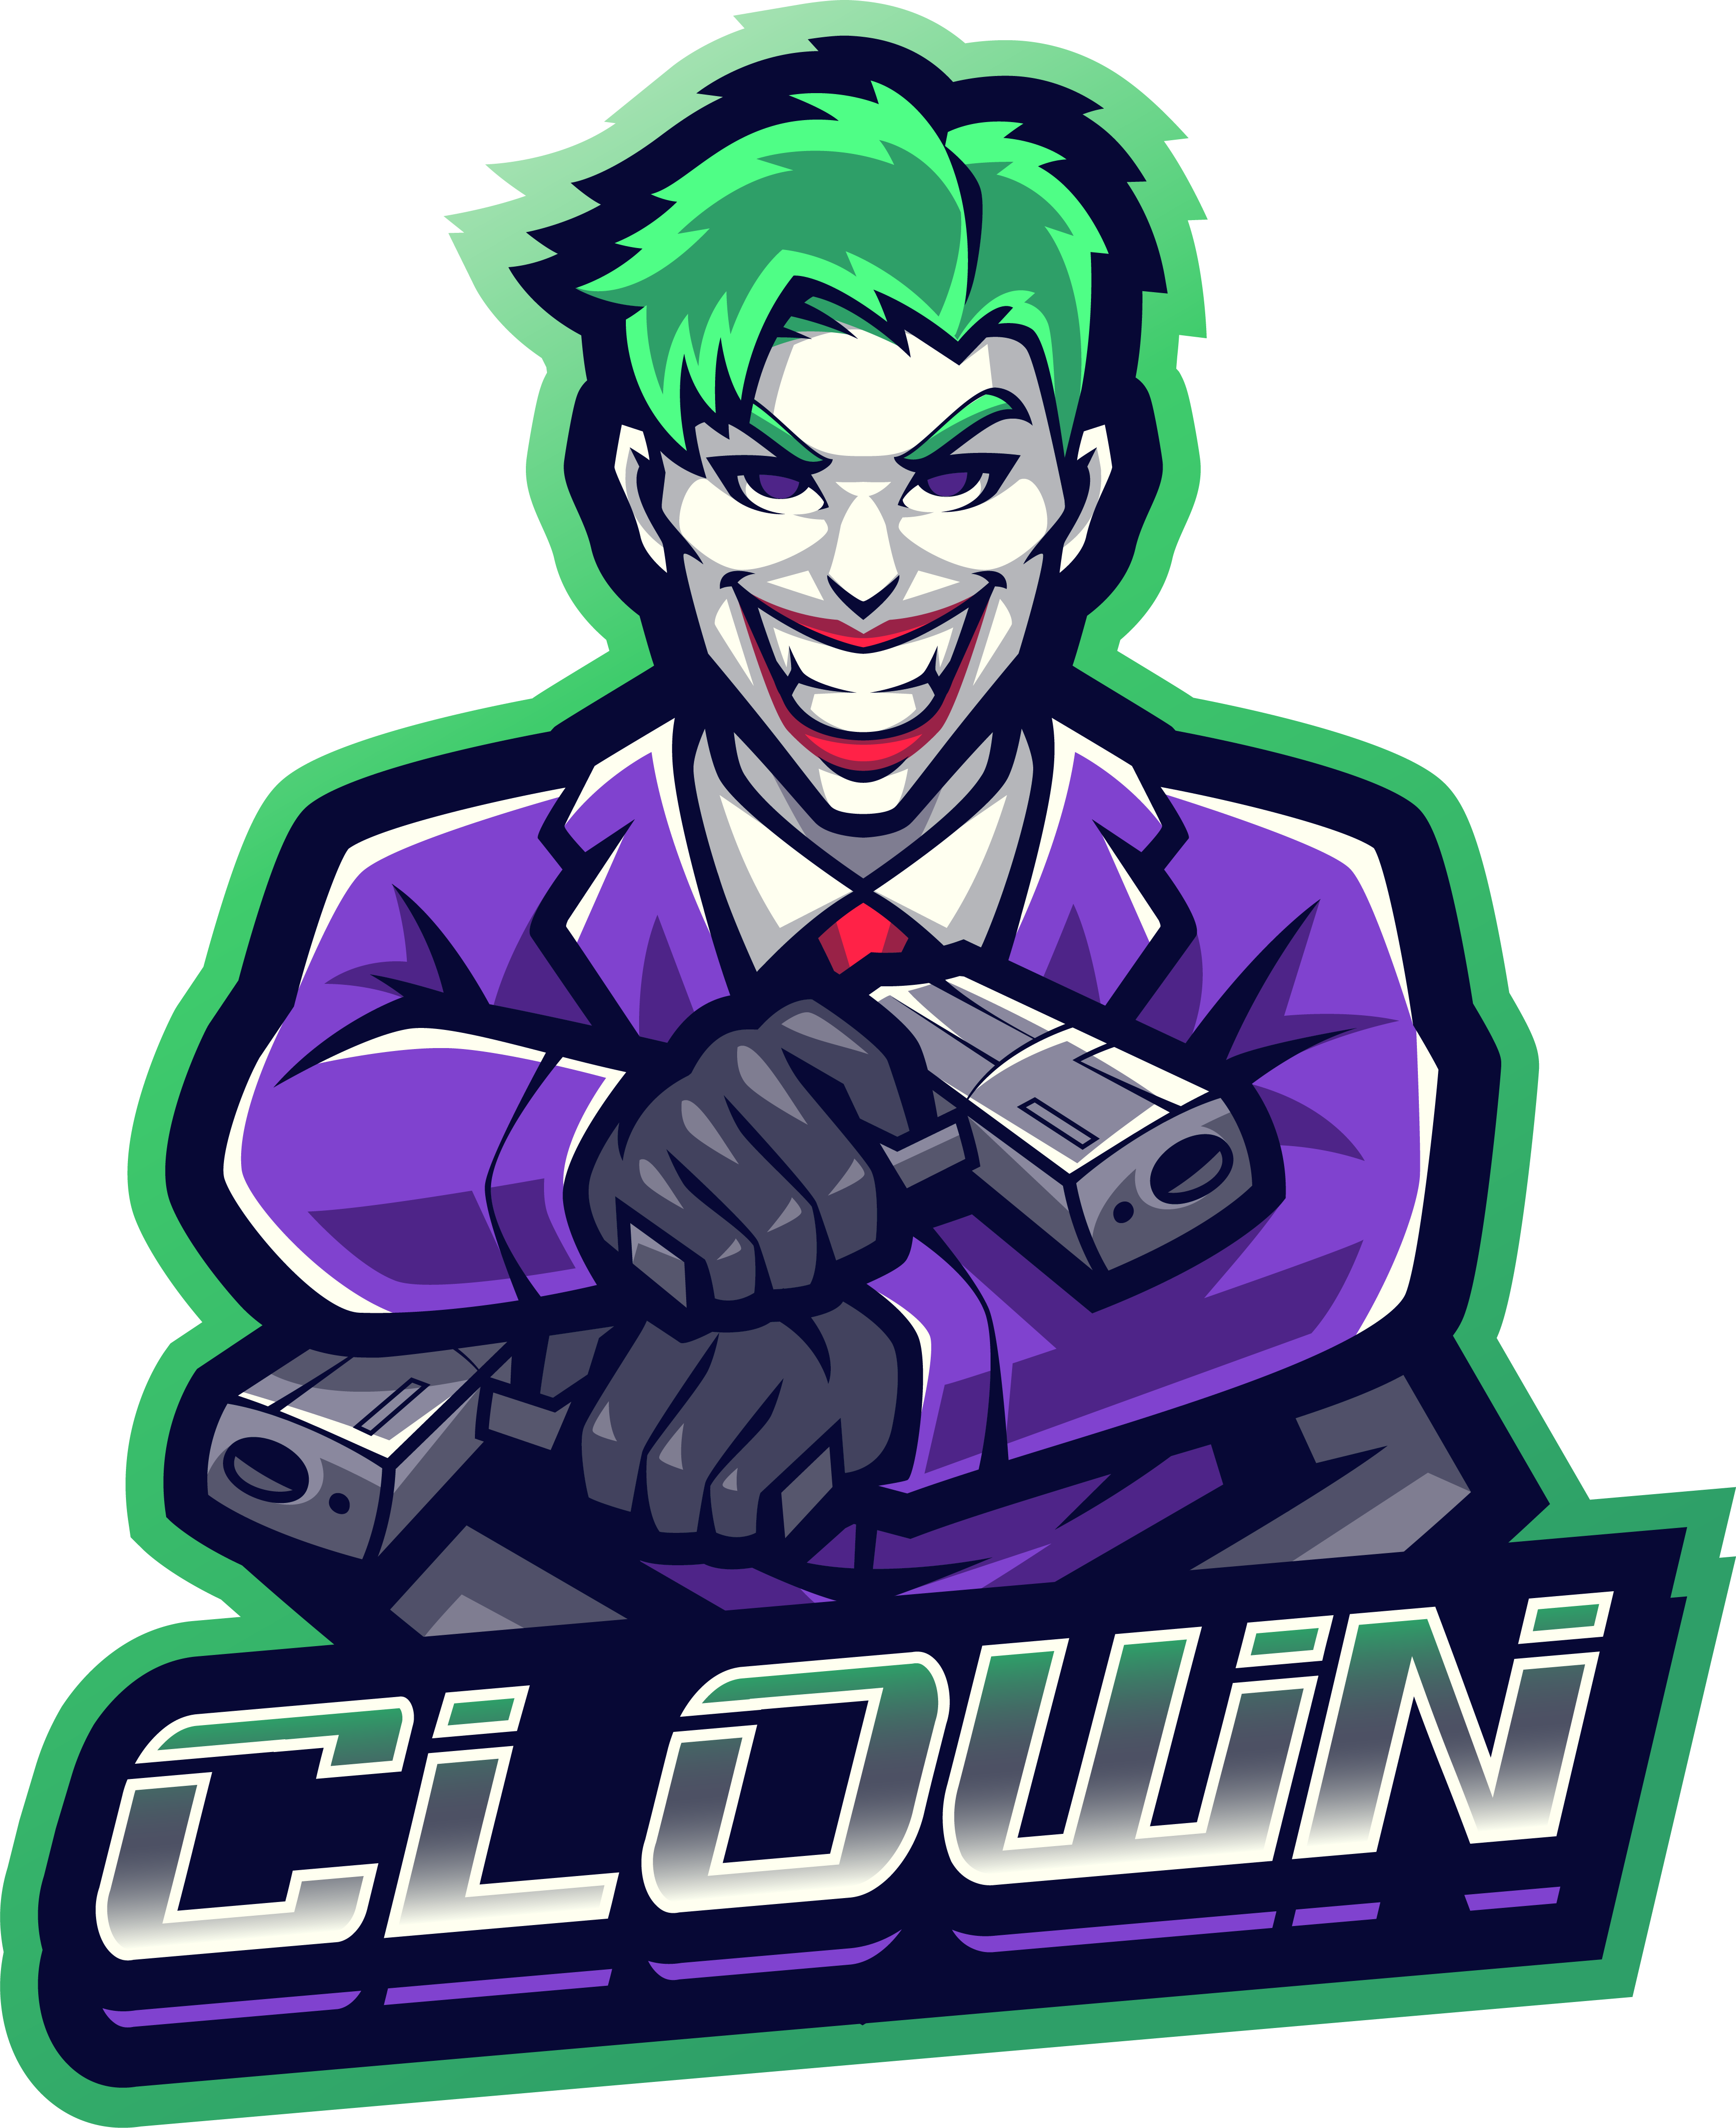 Clown gunner esport mascot logo design By Visink | TheHungryJPEG